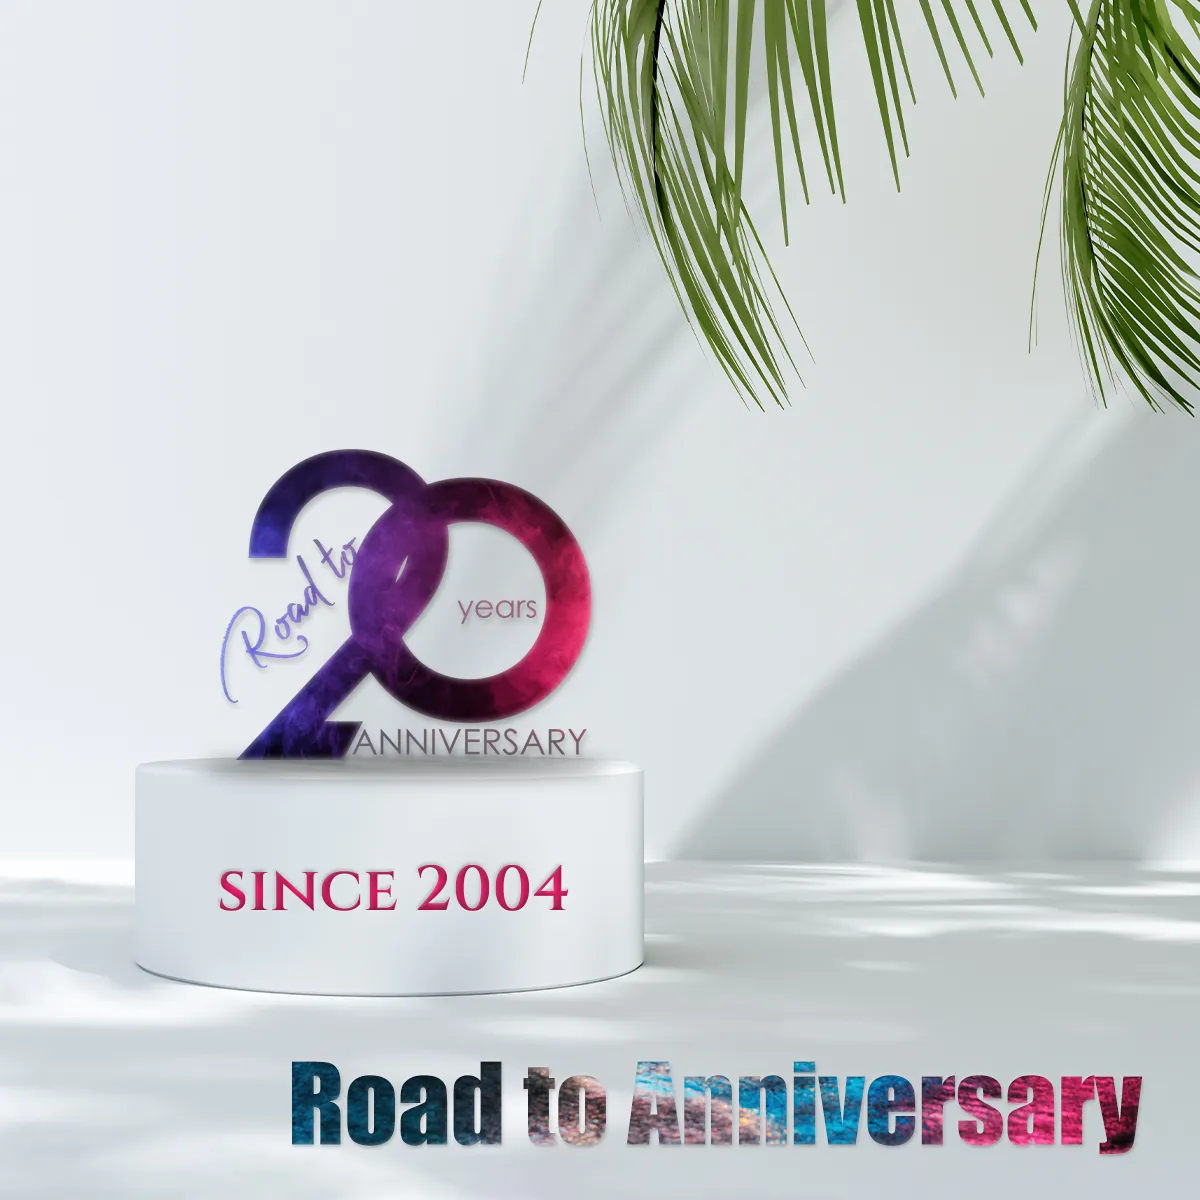 Road to 20th Anniversaryバナー